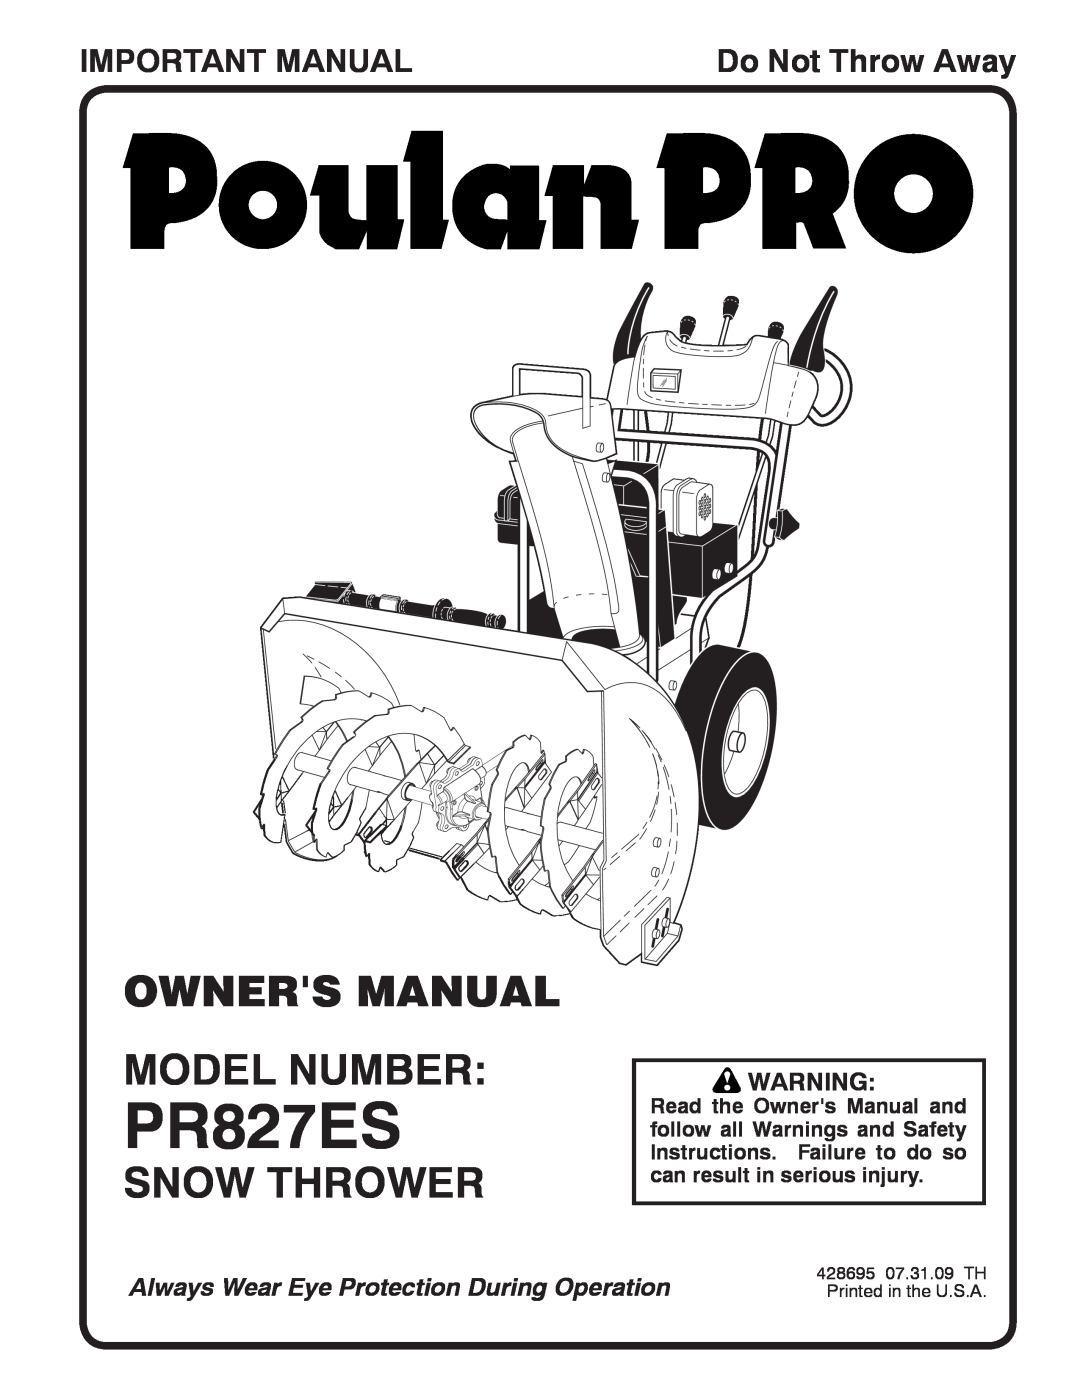 Poulan 96192003001, 428695 owner manual Snow Thrower, Important Manual, PR827ES, Do Not Throw Away 